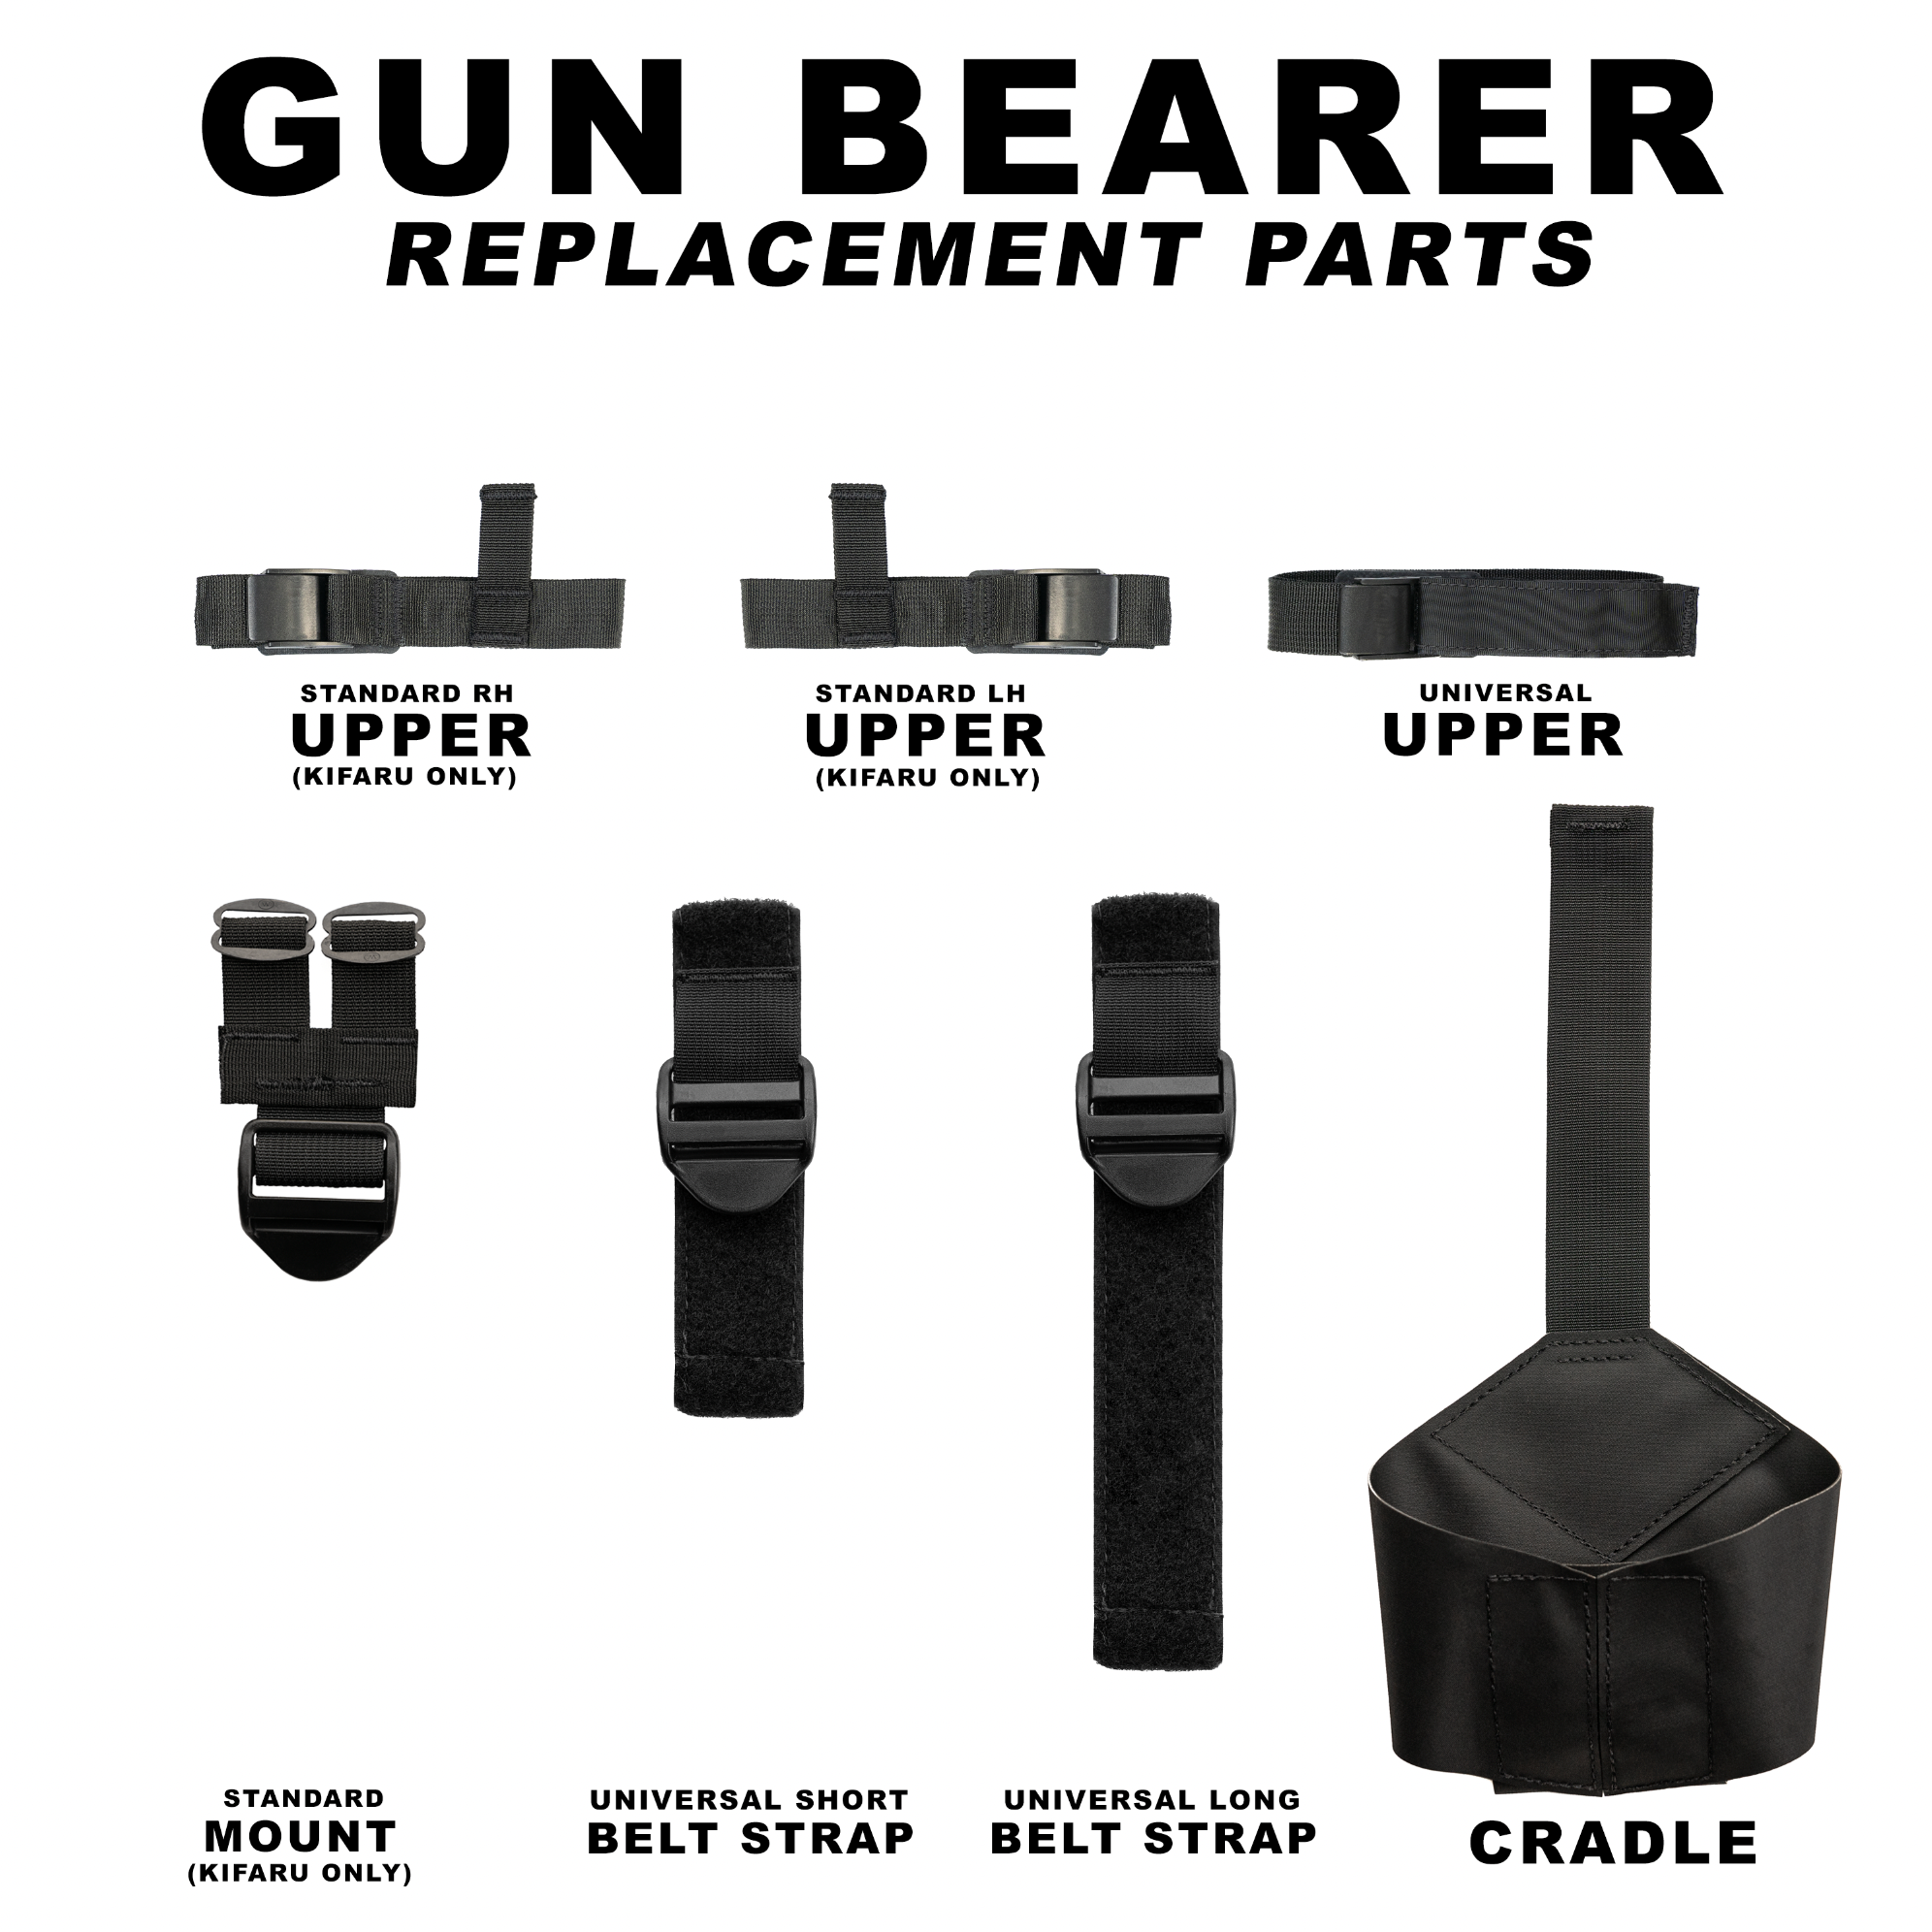 Gun Bearer Replacement Parts